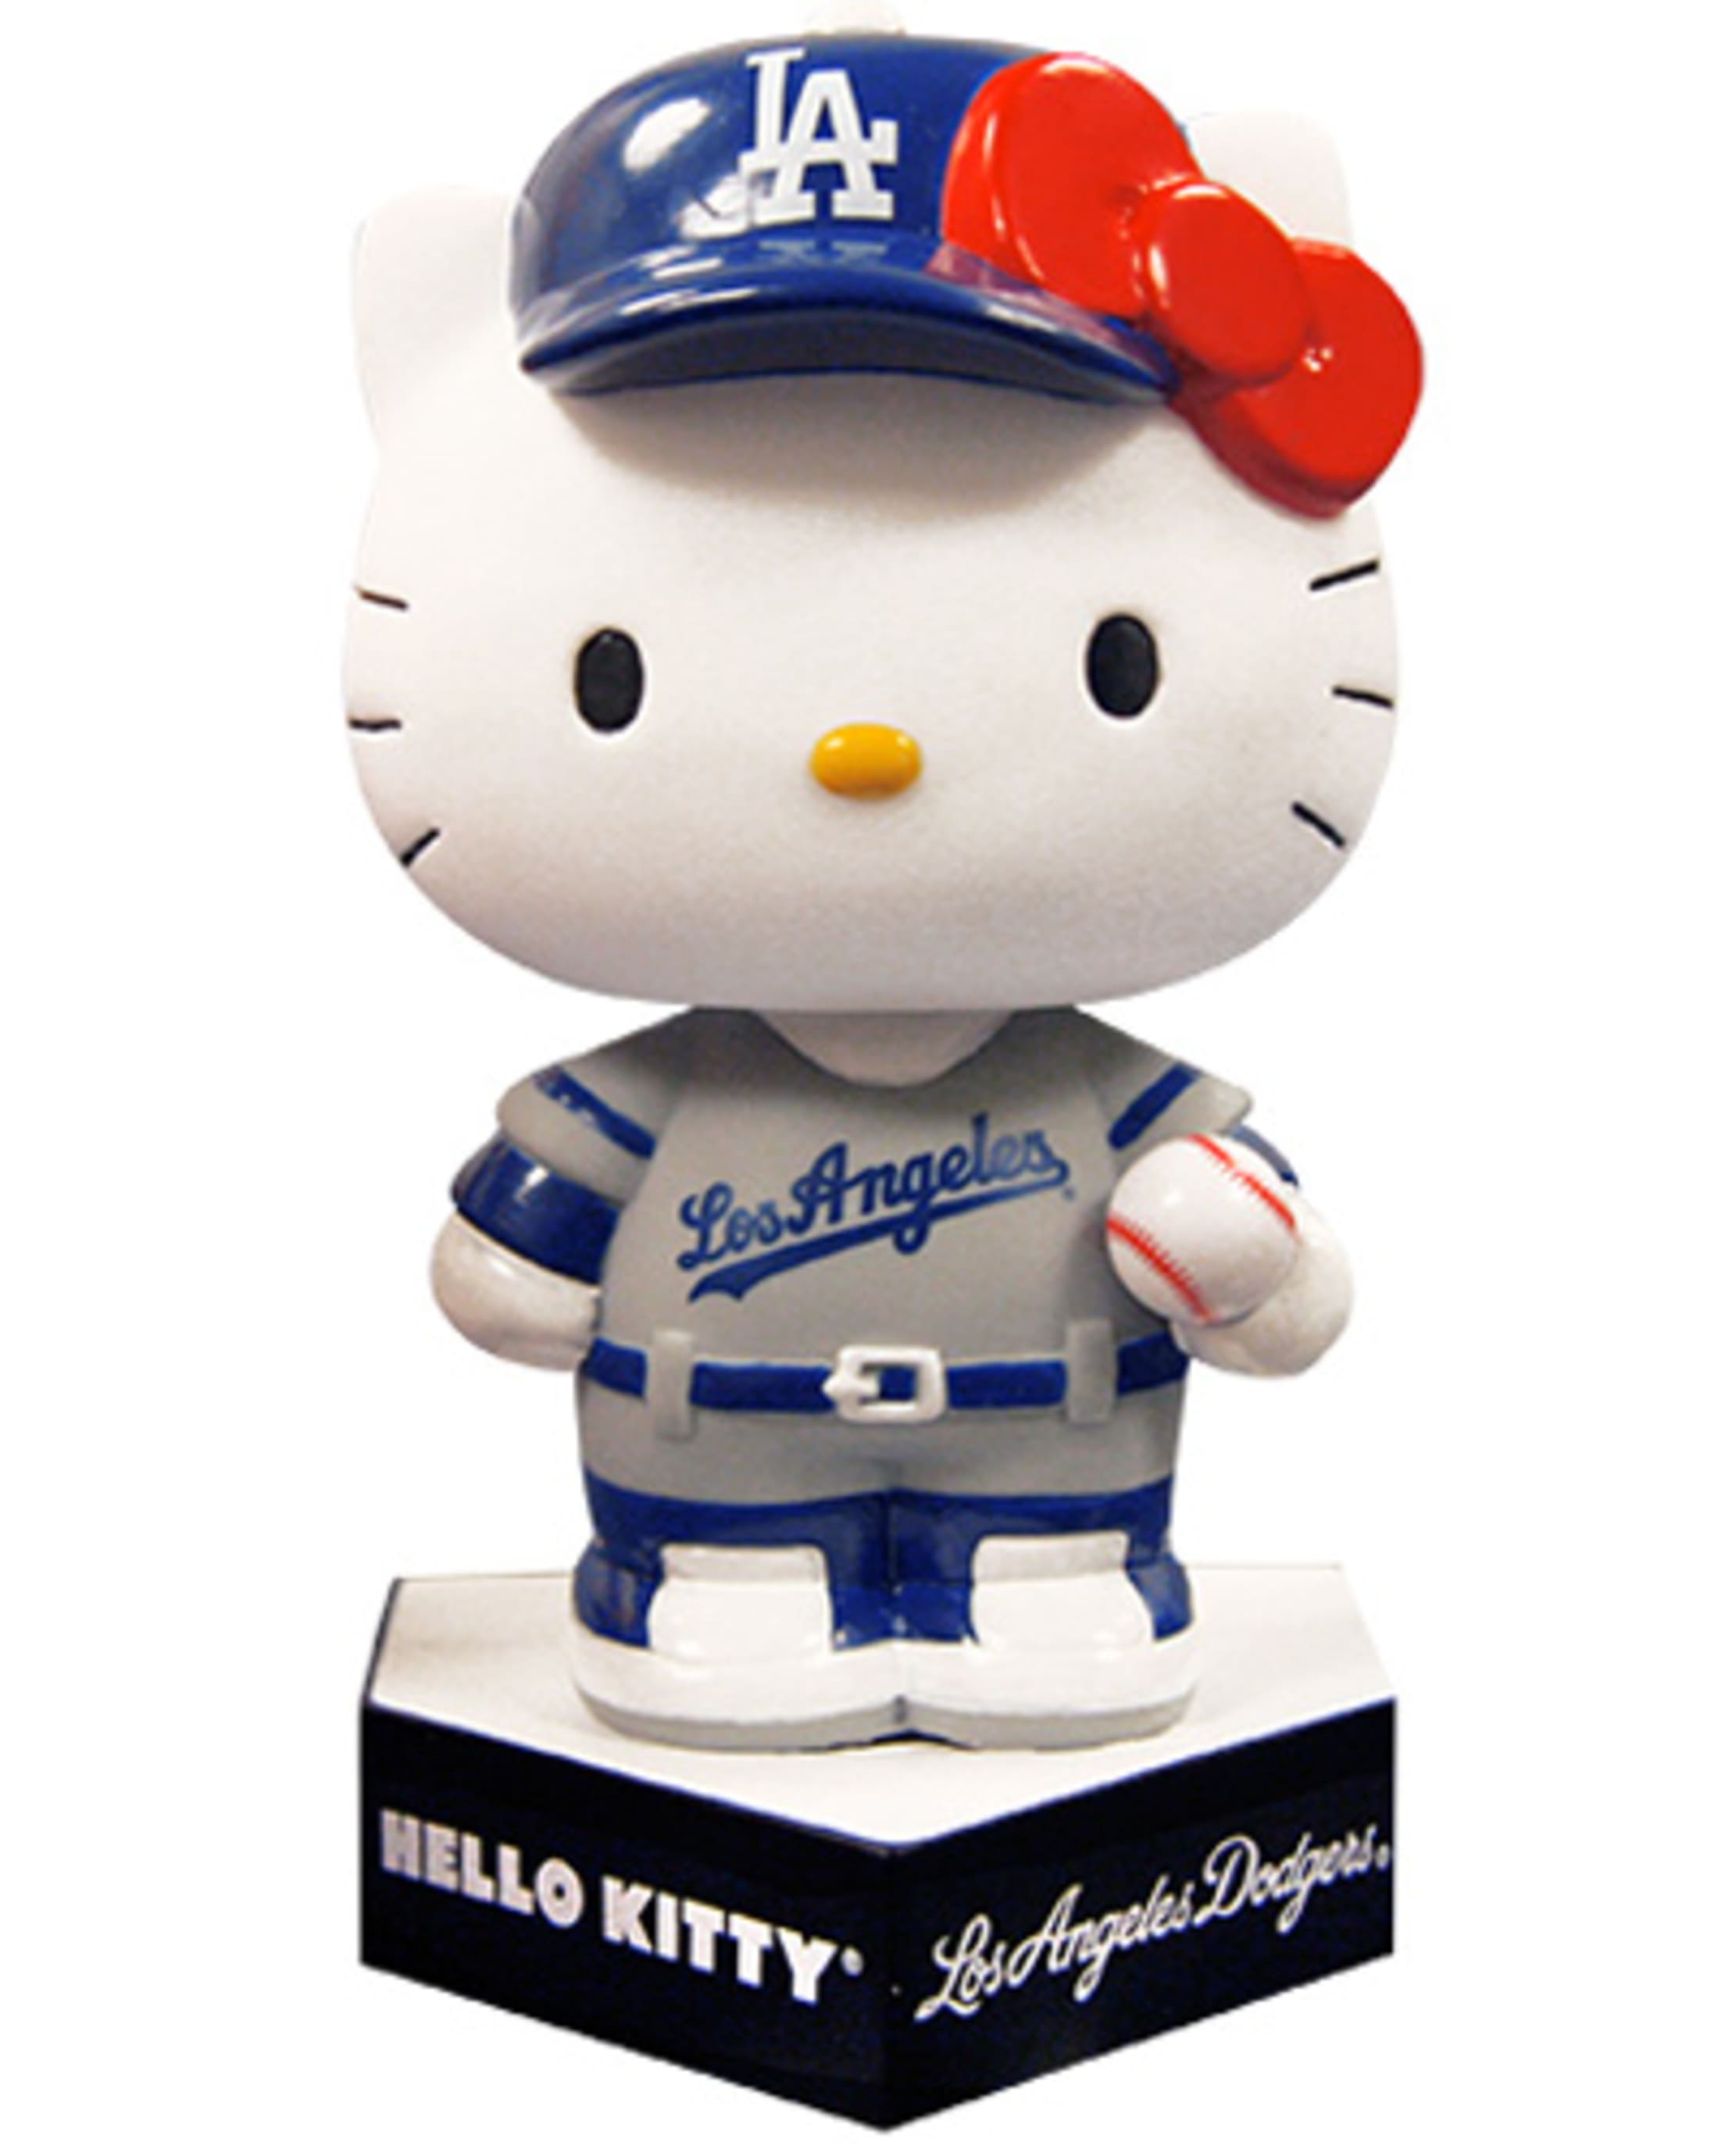 2023 Hello Kitty Bobblehead Los Angeles Dodgers SGA 8/3/23 New in box